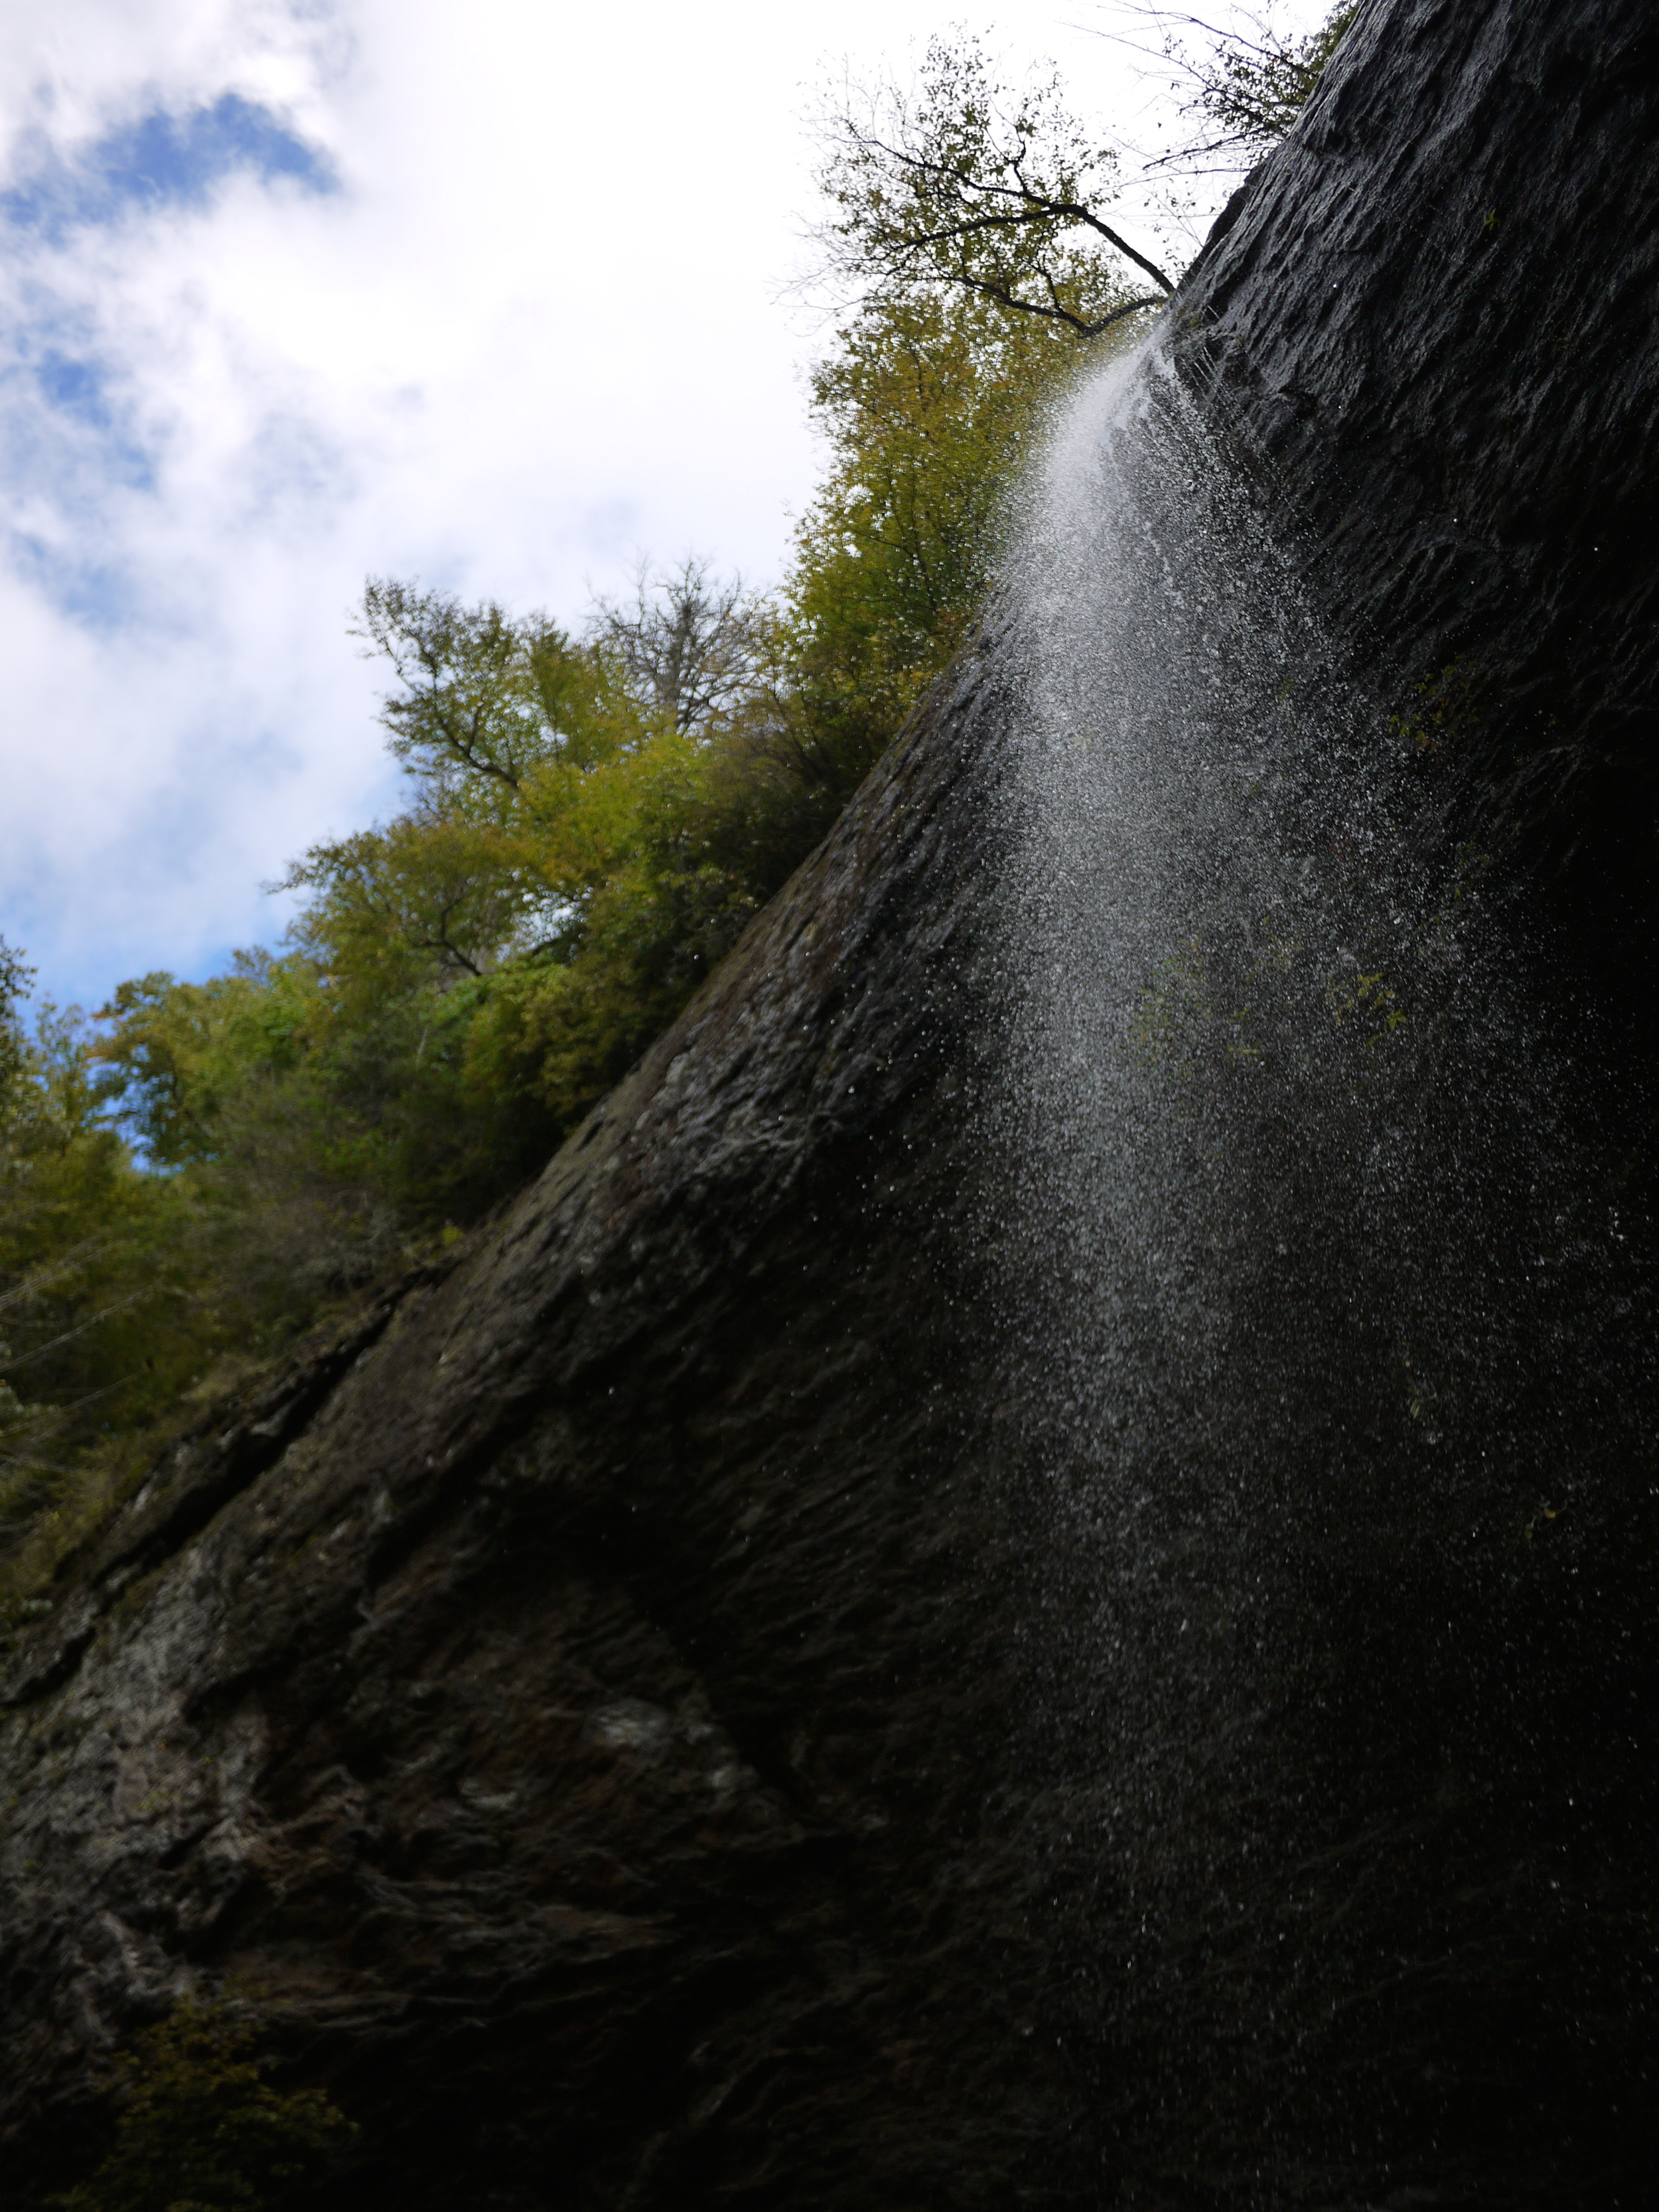 waterfall 2.JPG